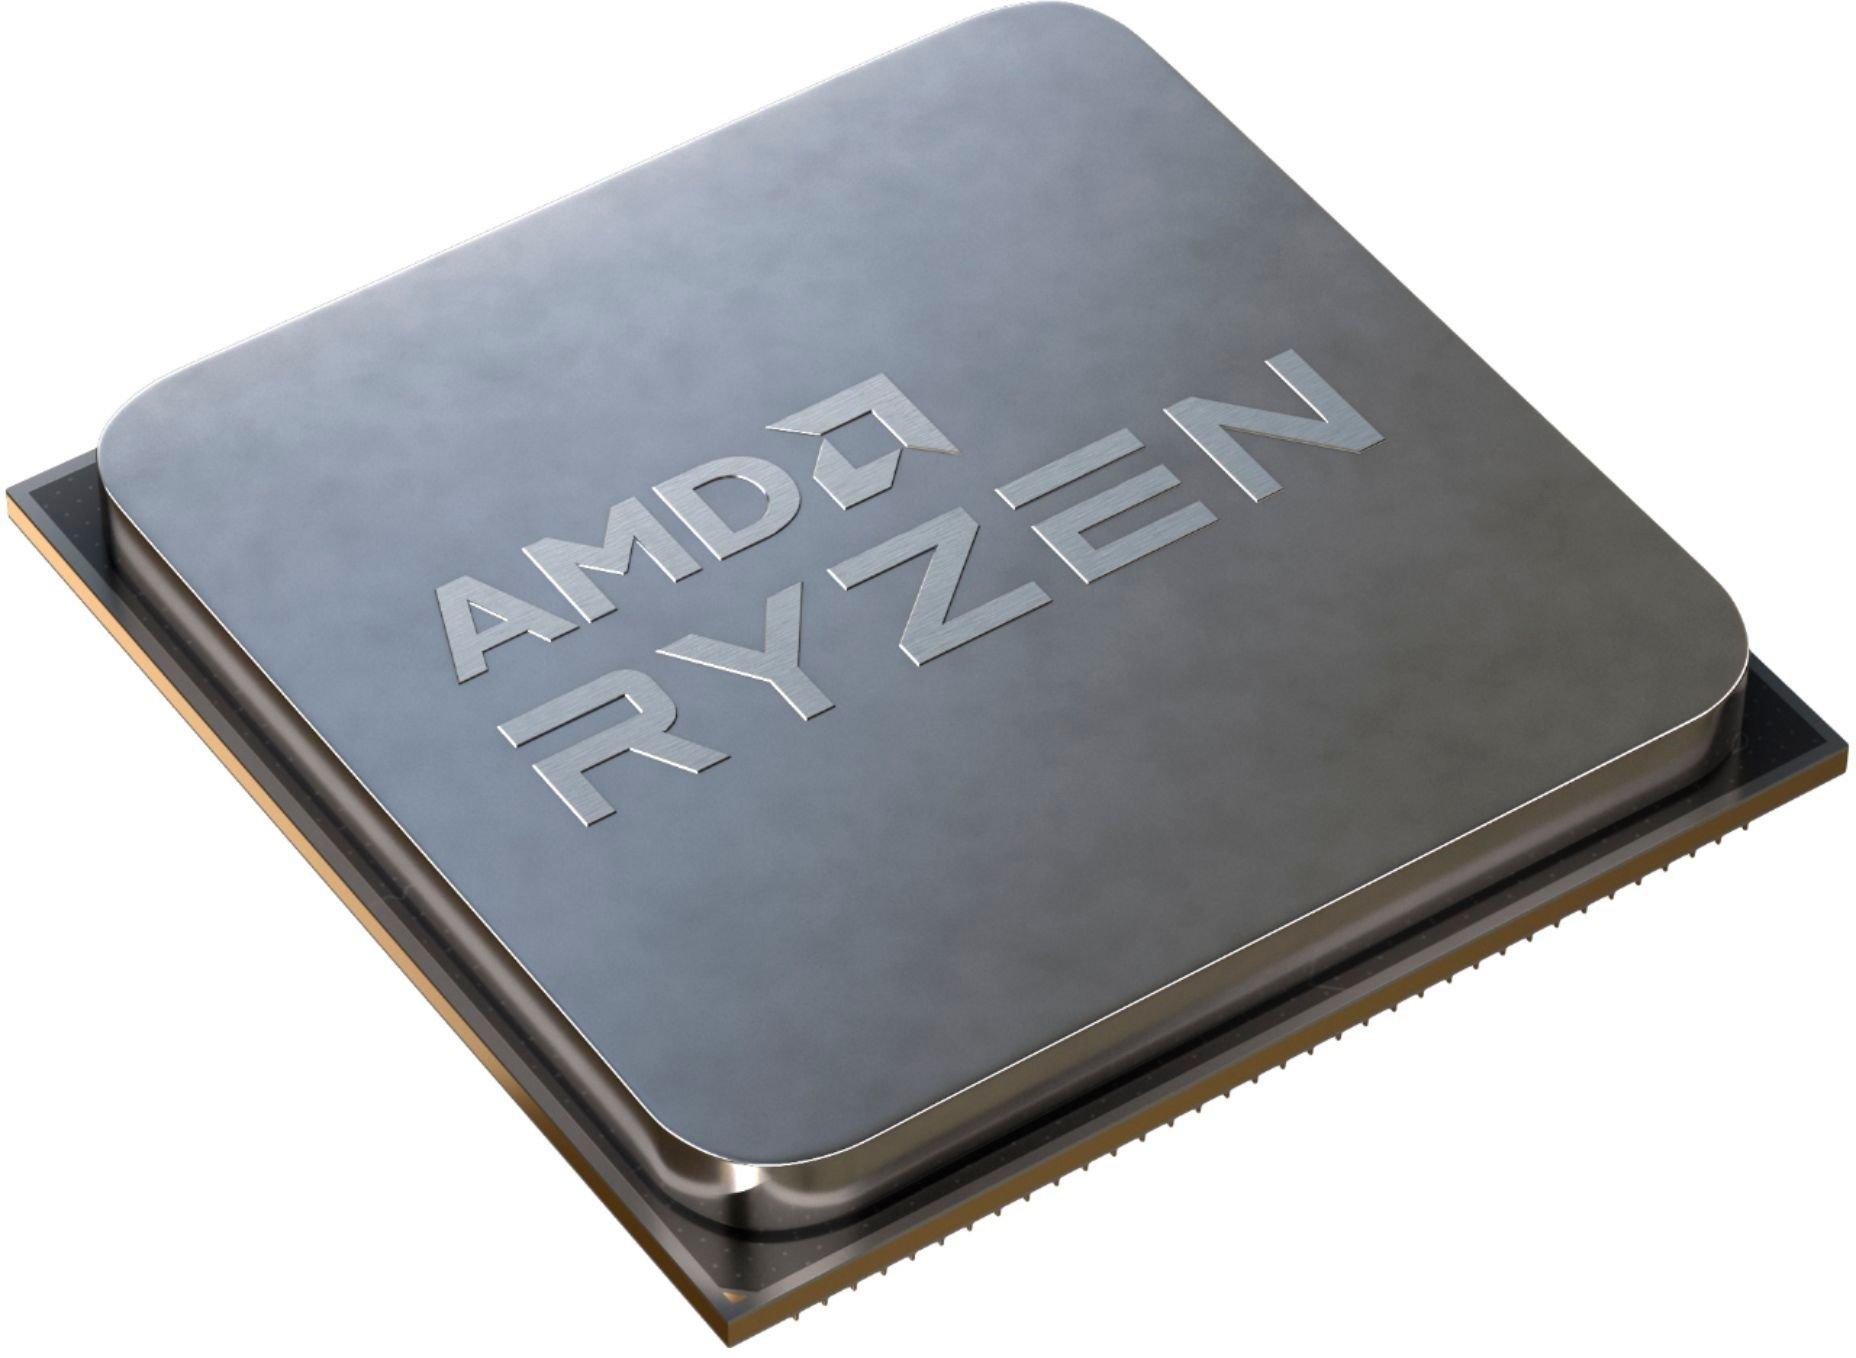 AMD Ryzen 9 5950X Processor 16-core 32 Threads up to 4.9GHz